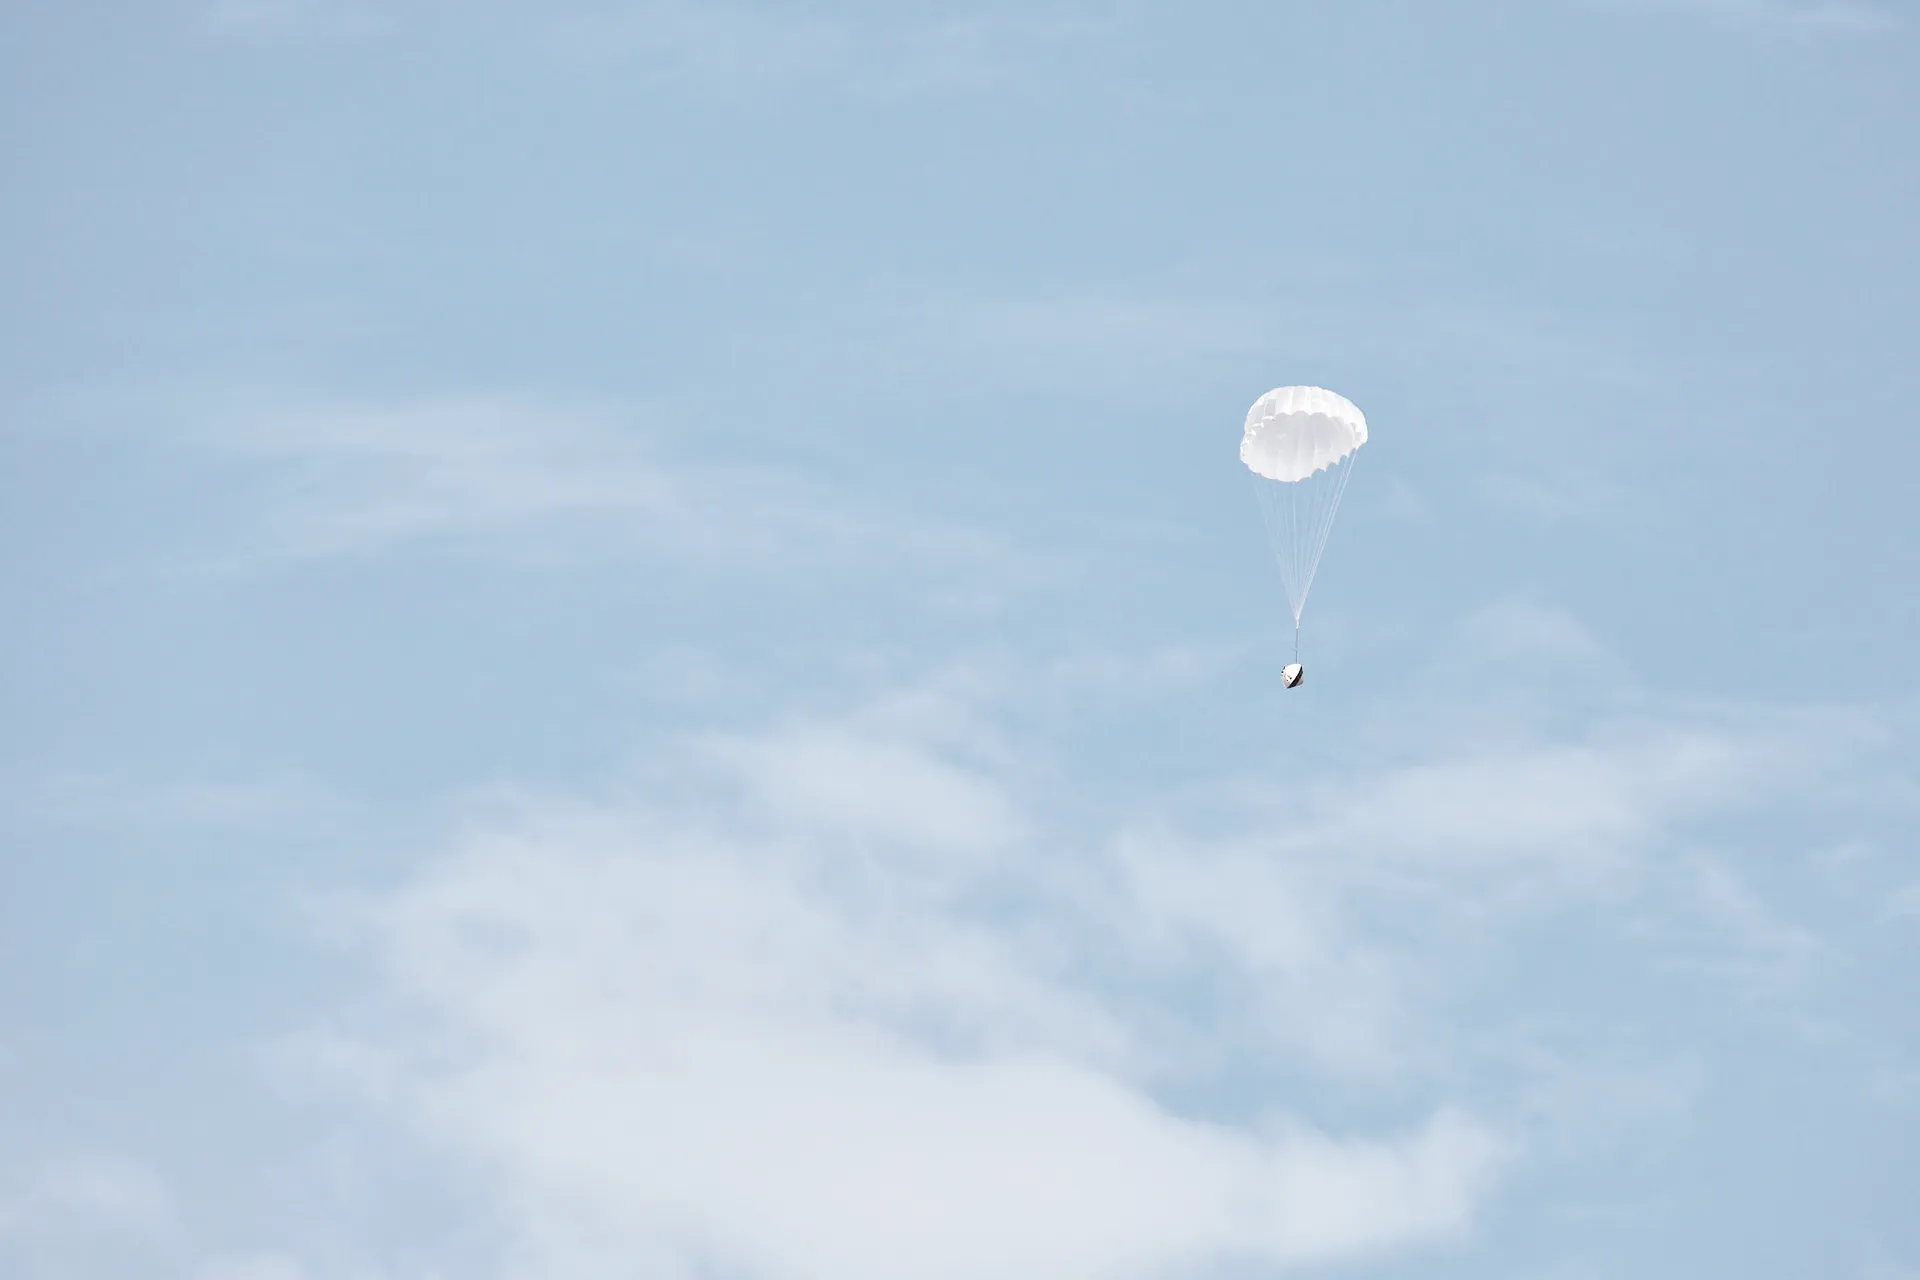 Parachute deployed for landing